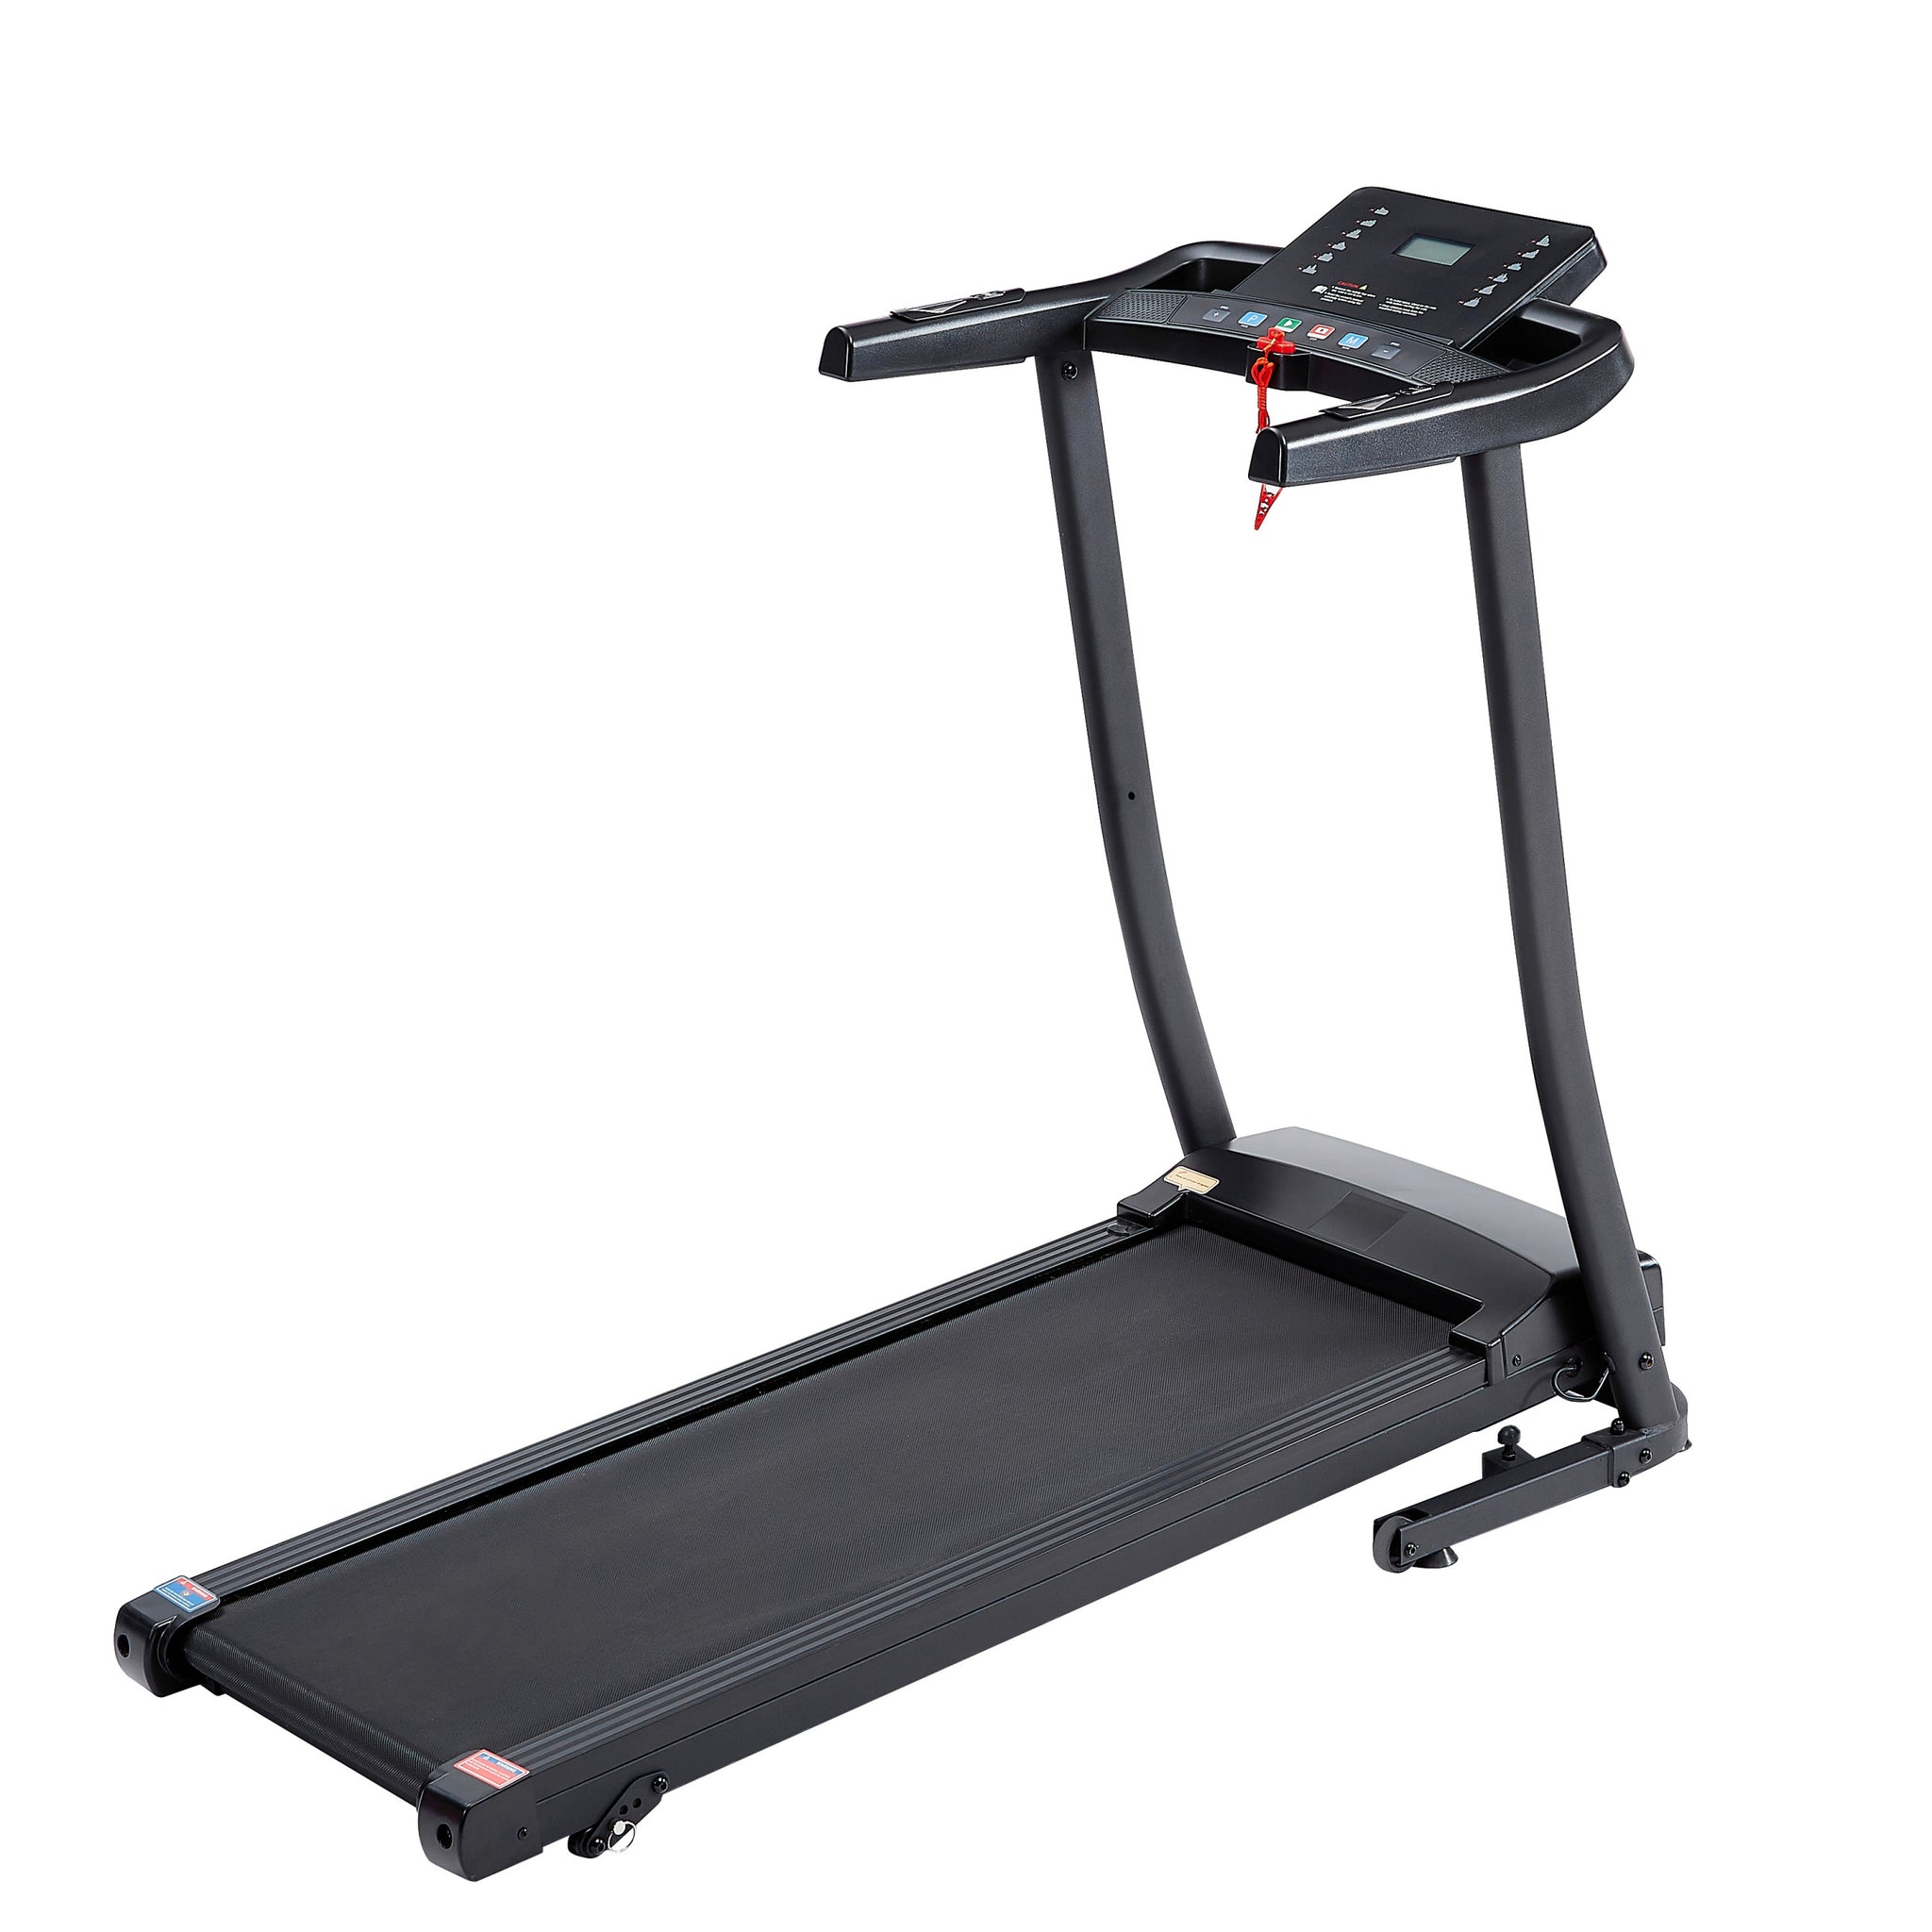 Treadmill 2.5 HP folding treadmill, easy to move, with black-steel